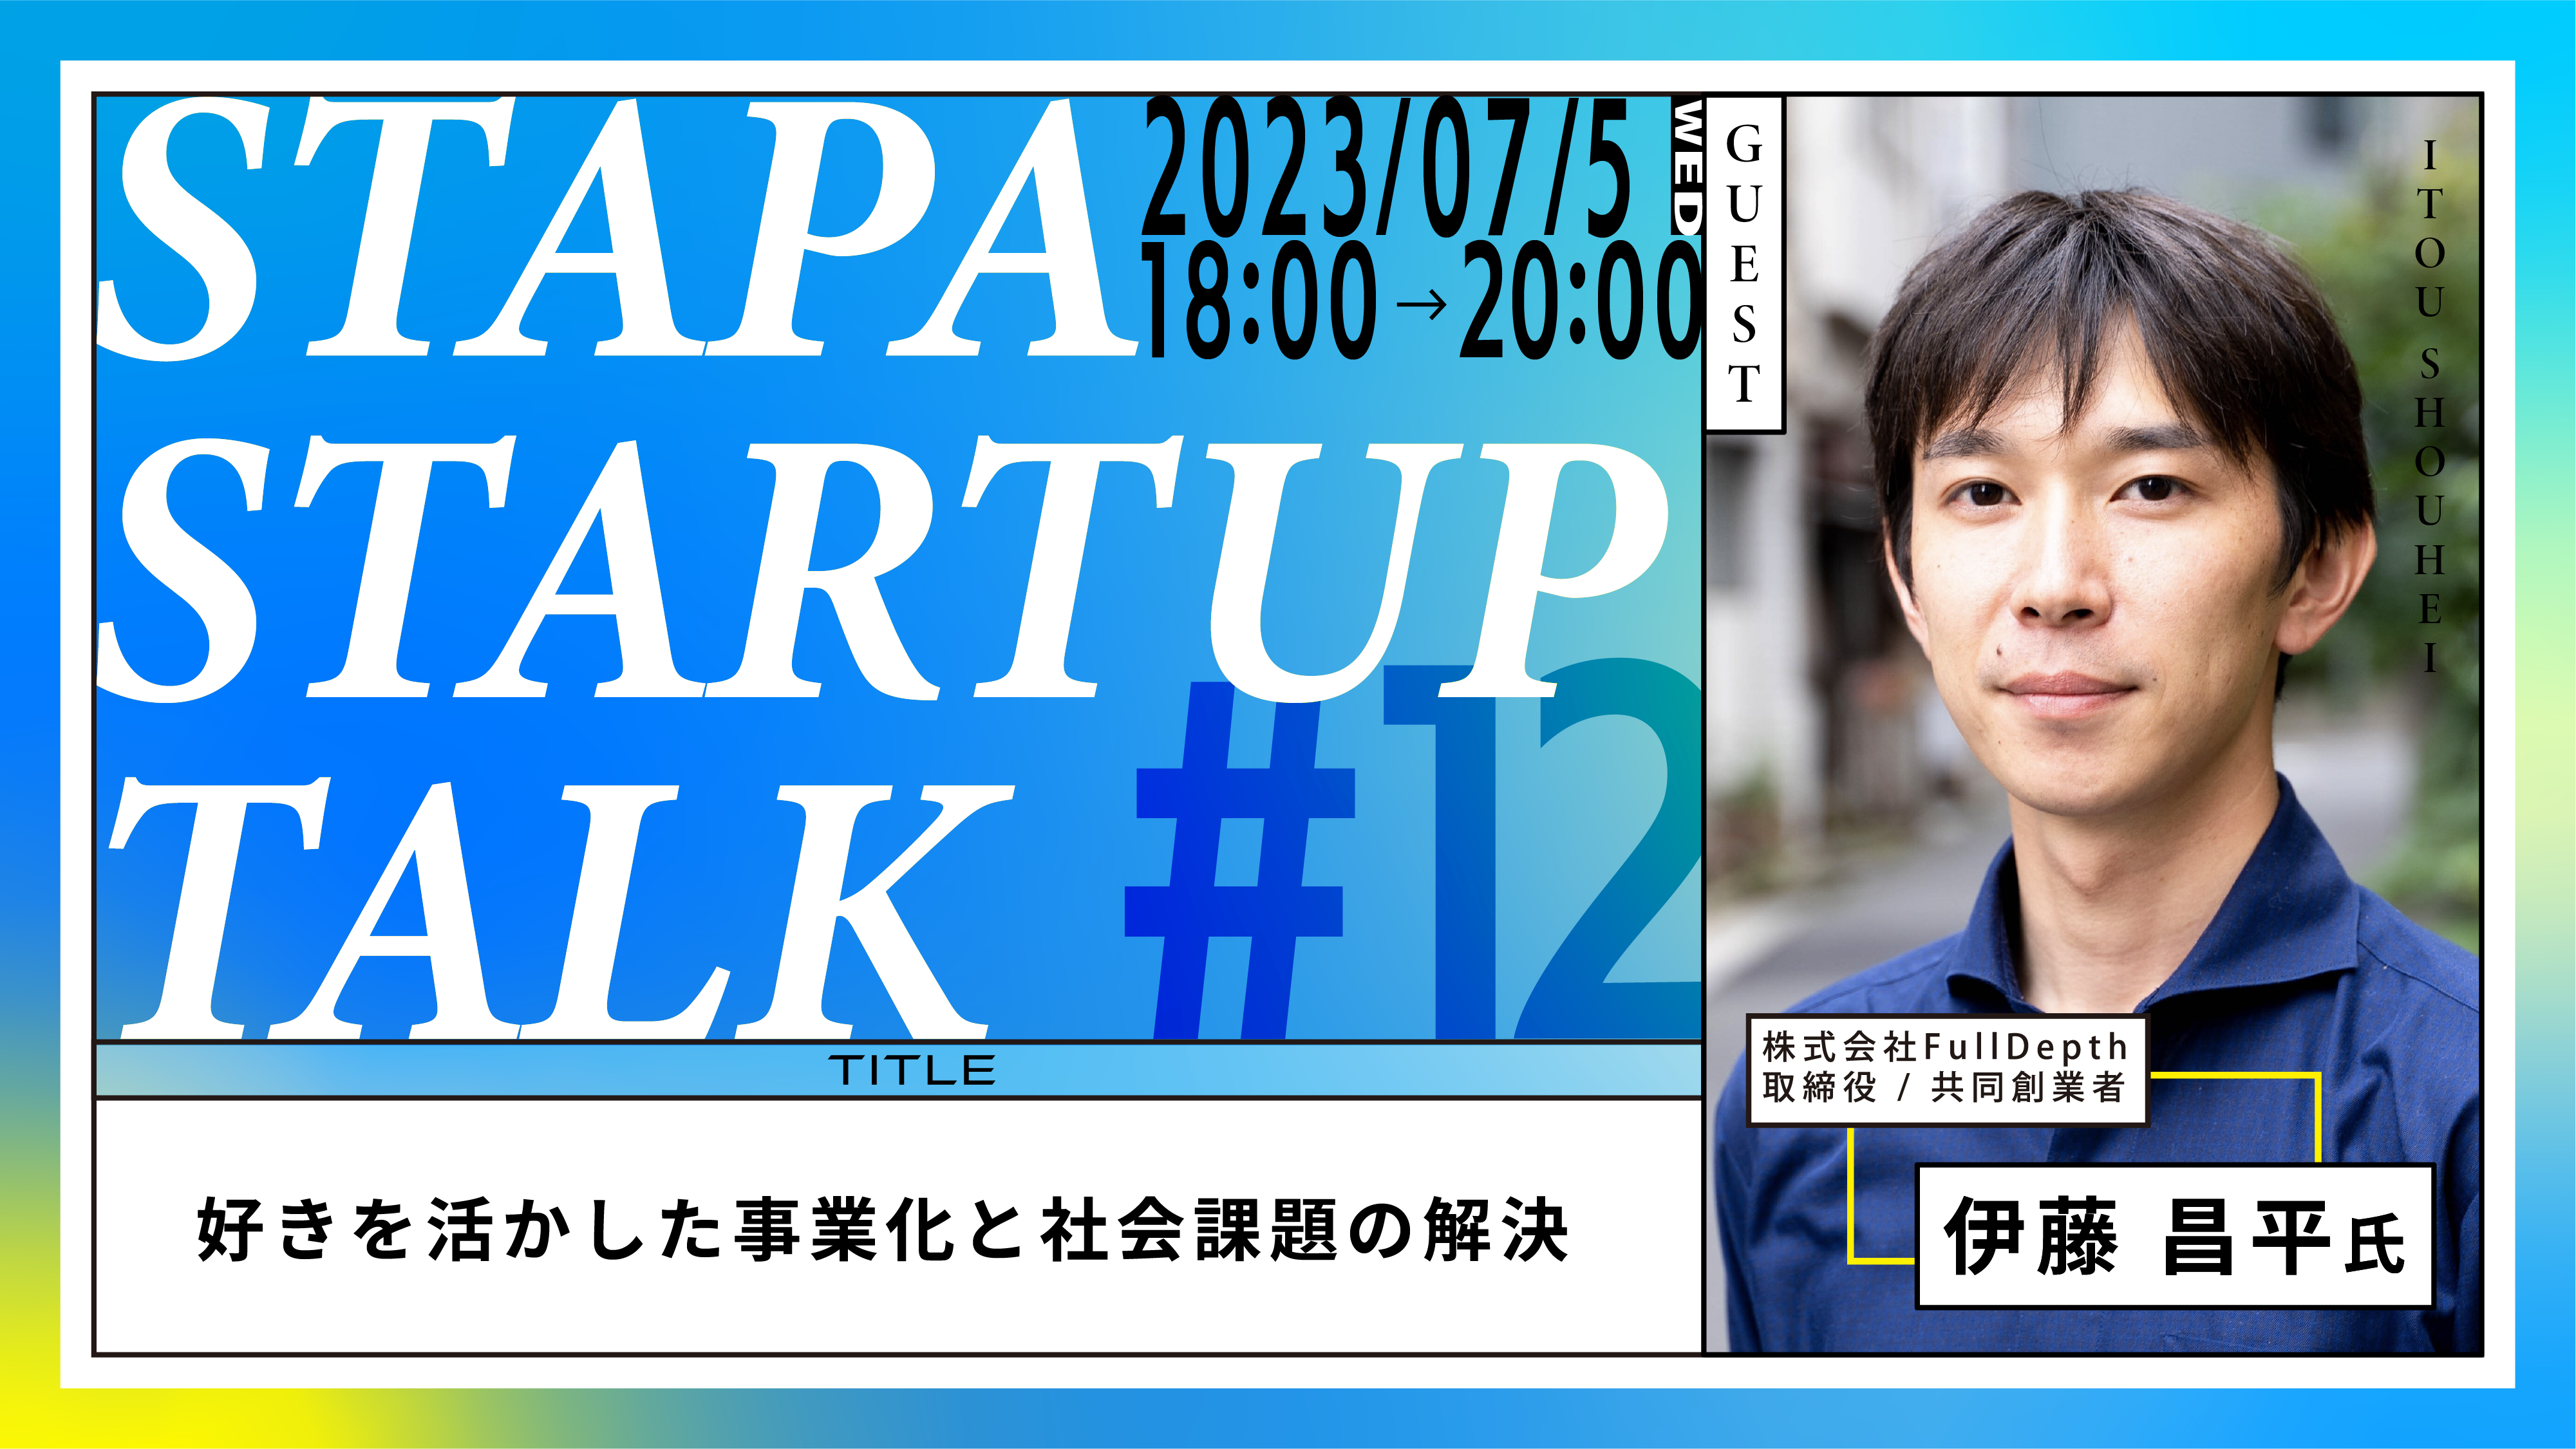 STAPA STARTUP TALK #12 －好きを活かした事業化と社会課題の解決－